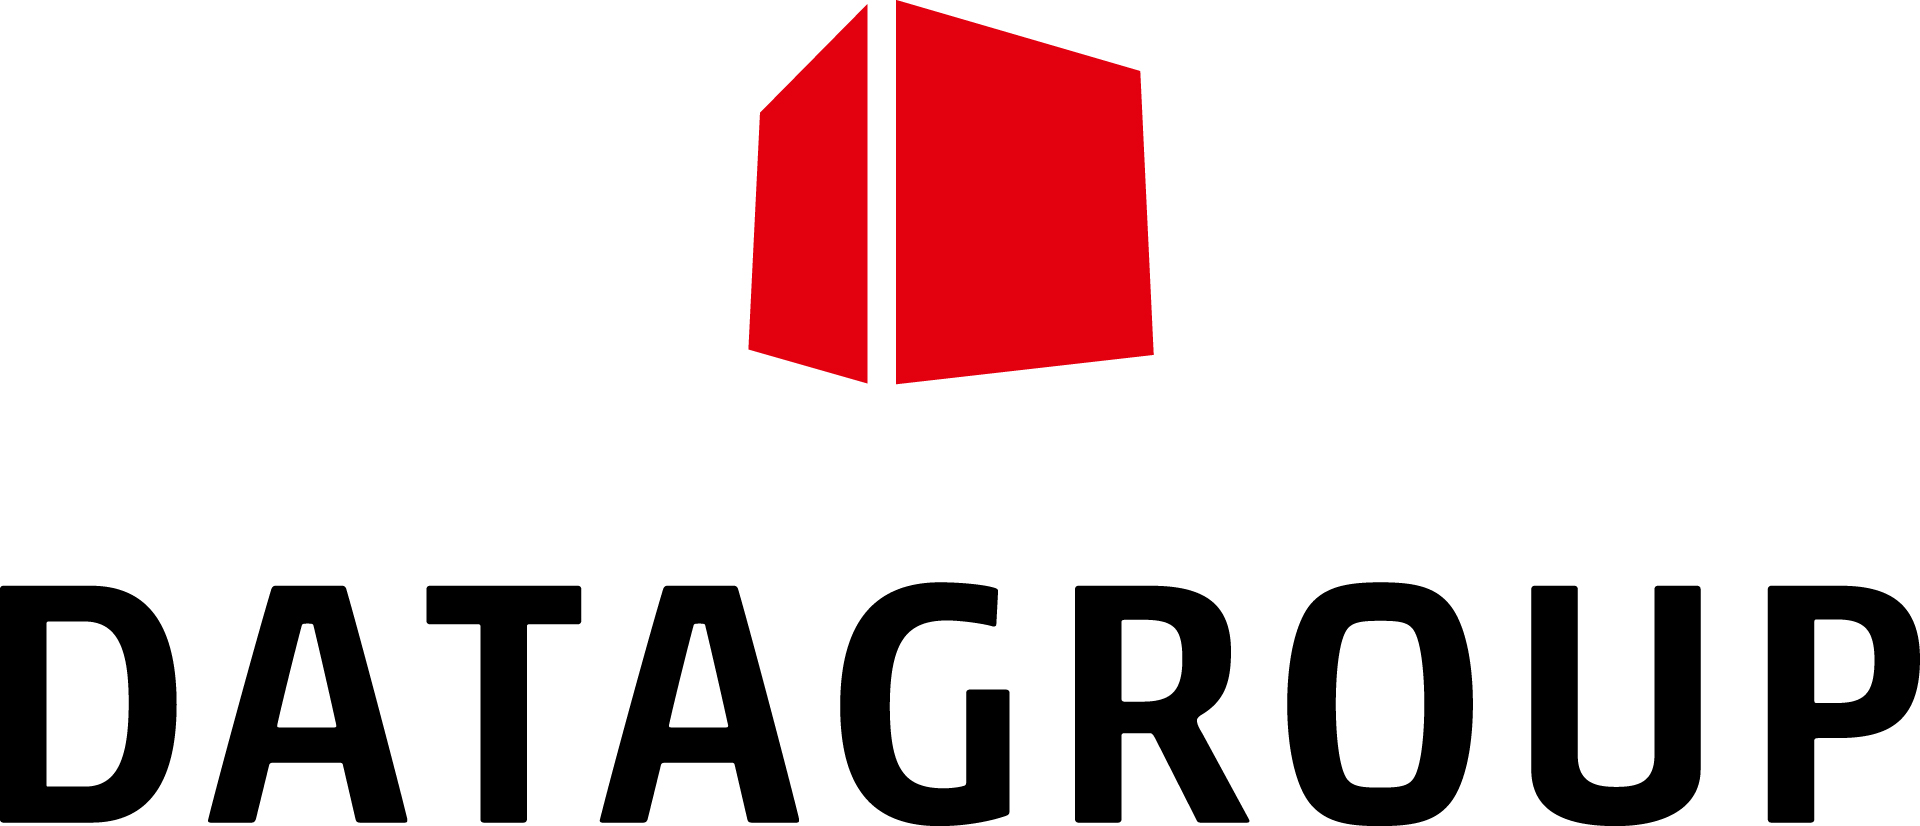 dg-logo-standard-srgb-high-res.jpg